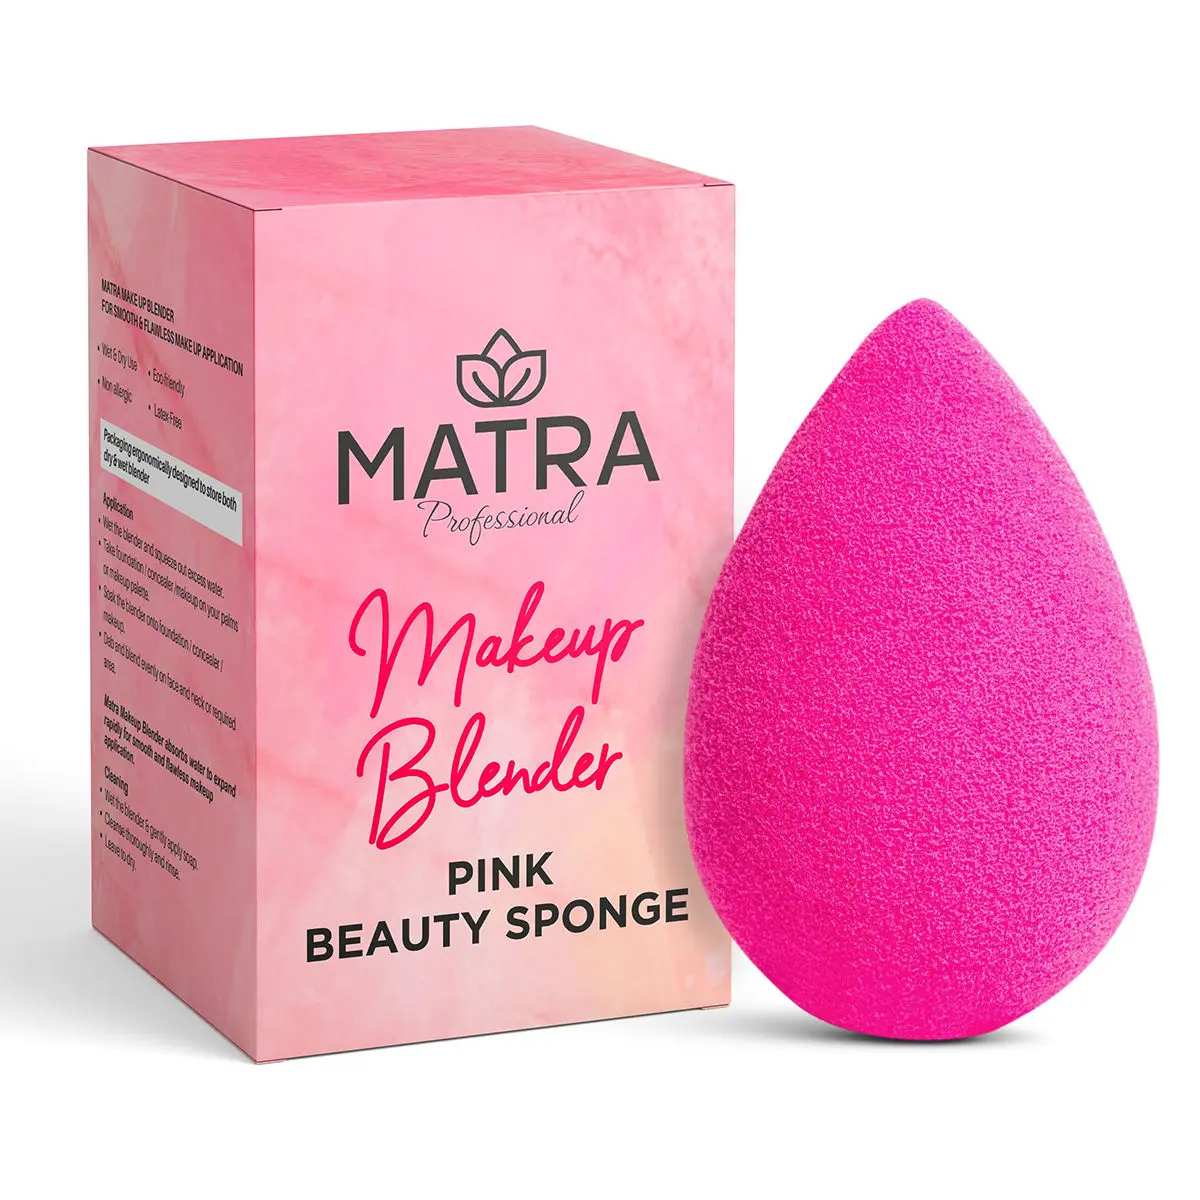 MATRA Matra Pink Beauty Sponge Makeup Blender – Foundation Sponge for flawless Make-up Powder Puff